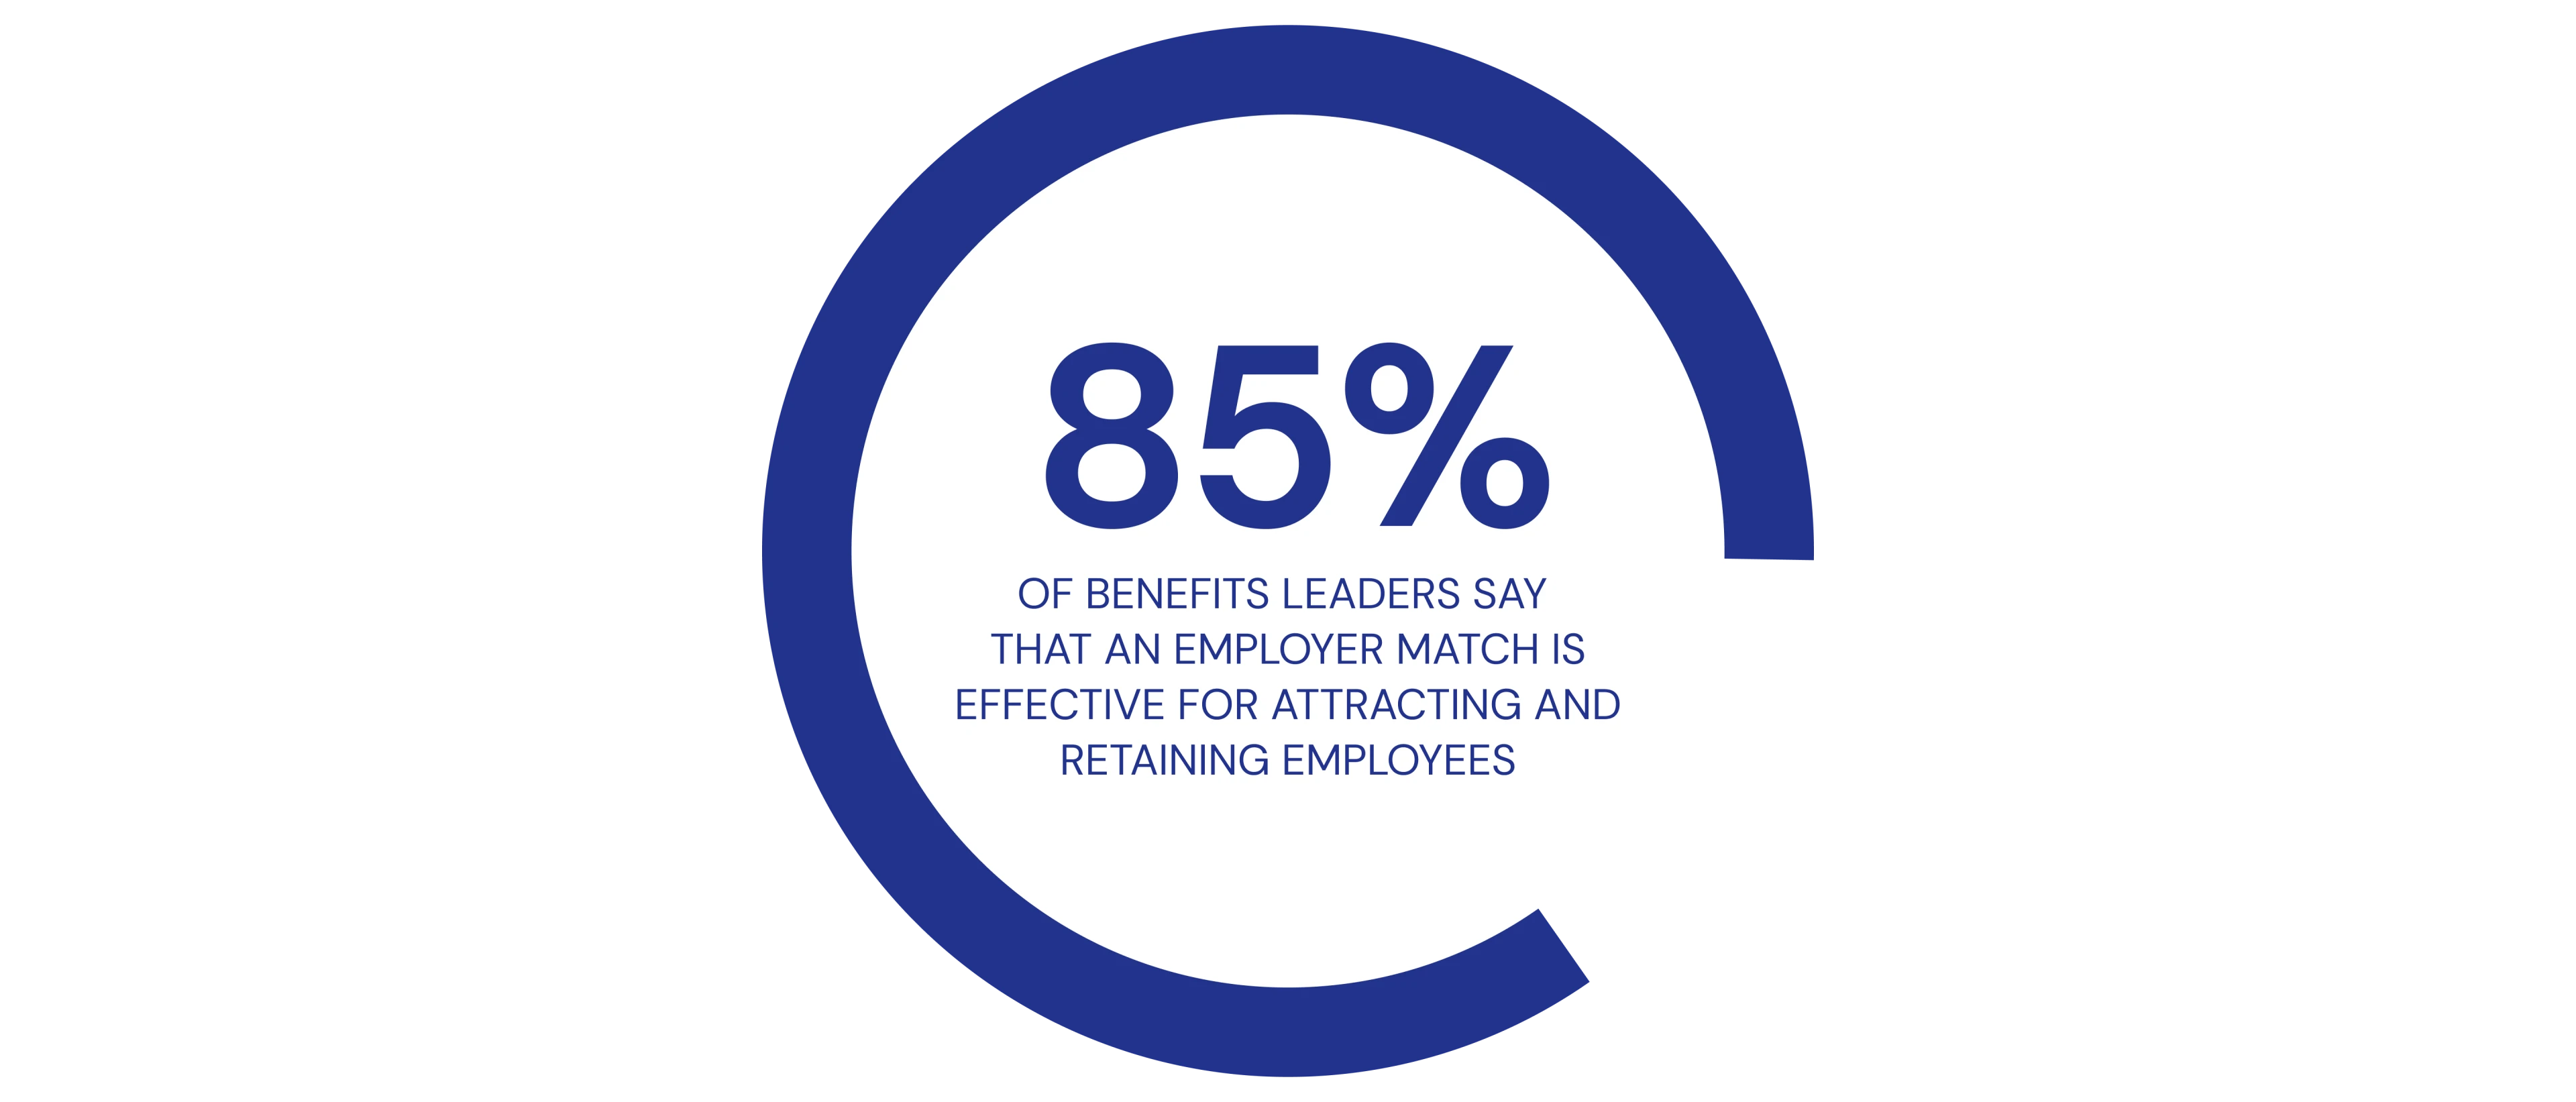 blog-85-benefits-leaders-employer-match